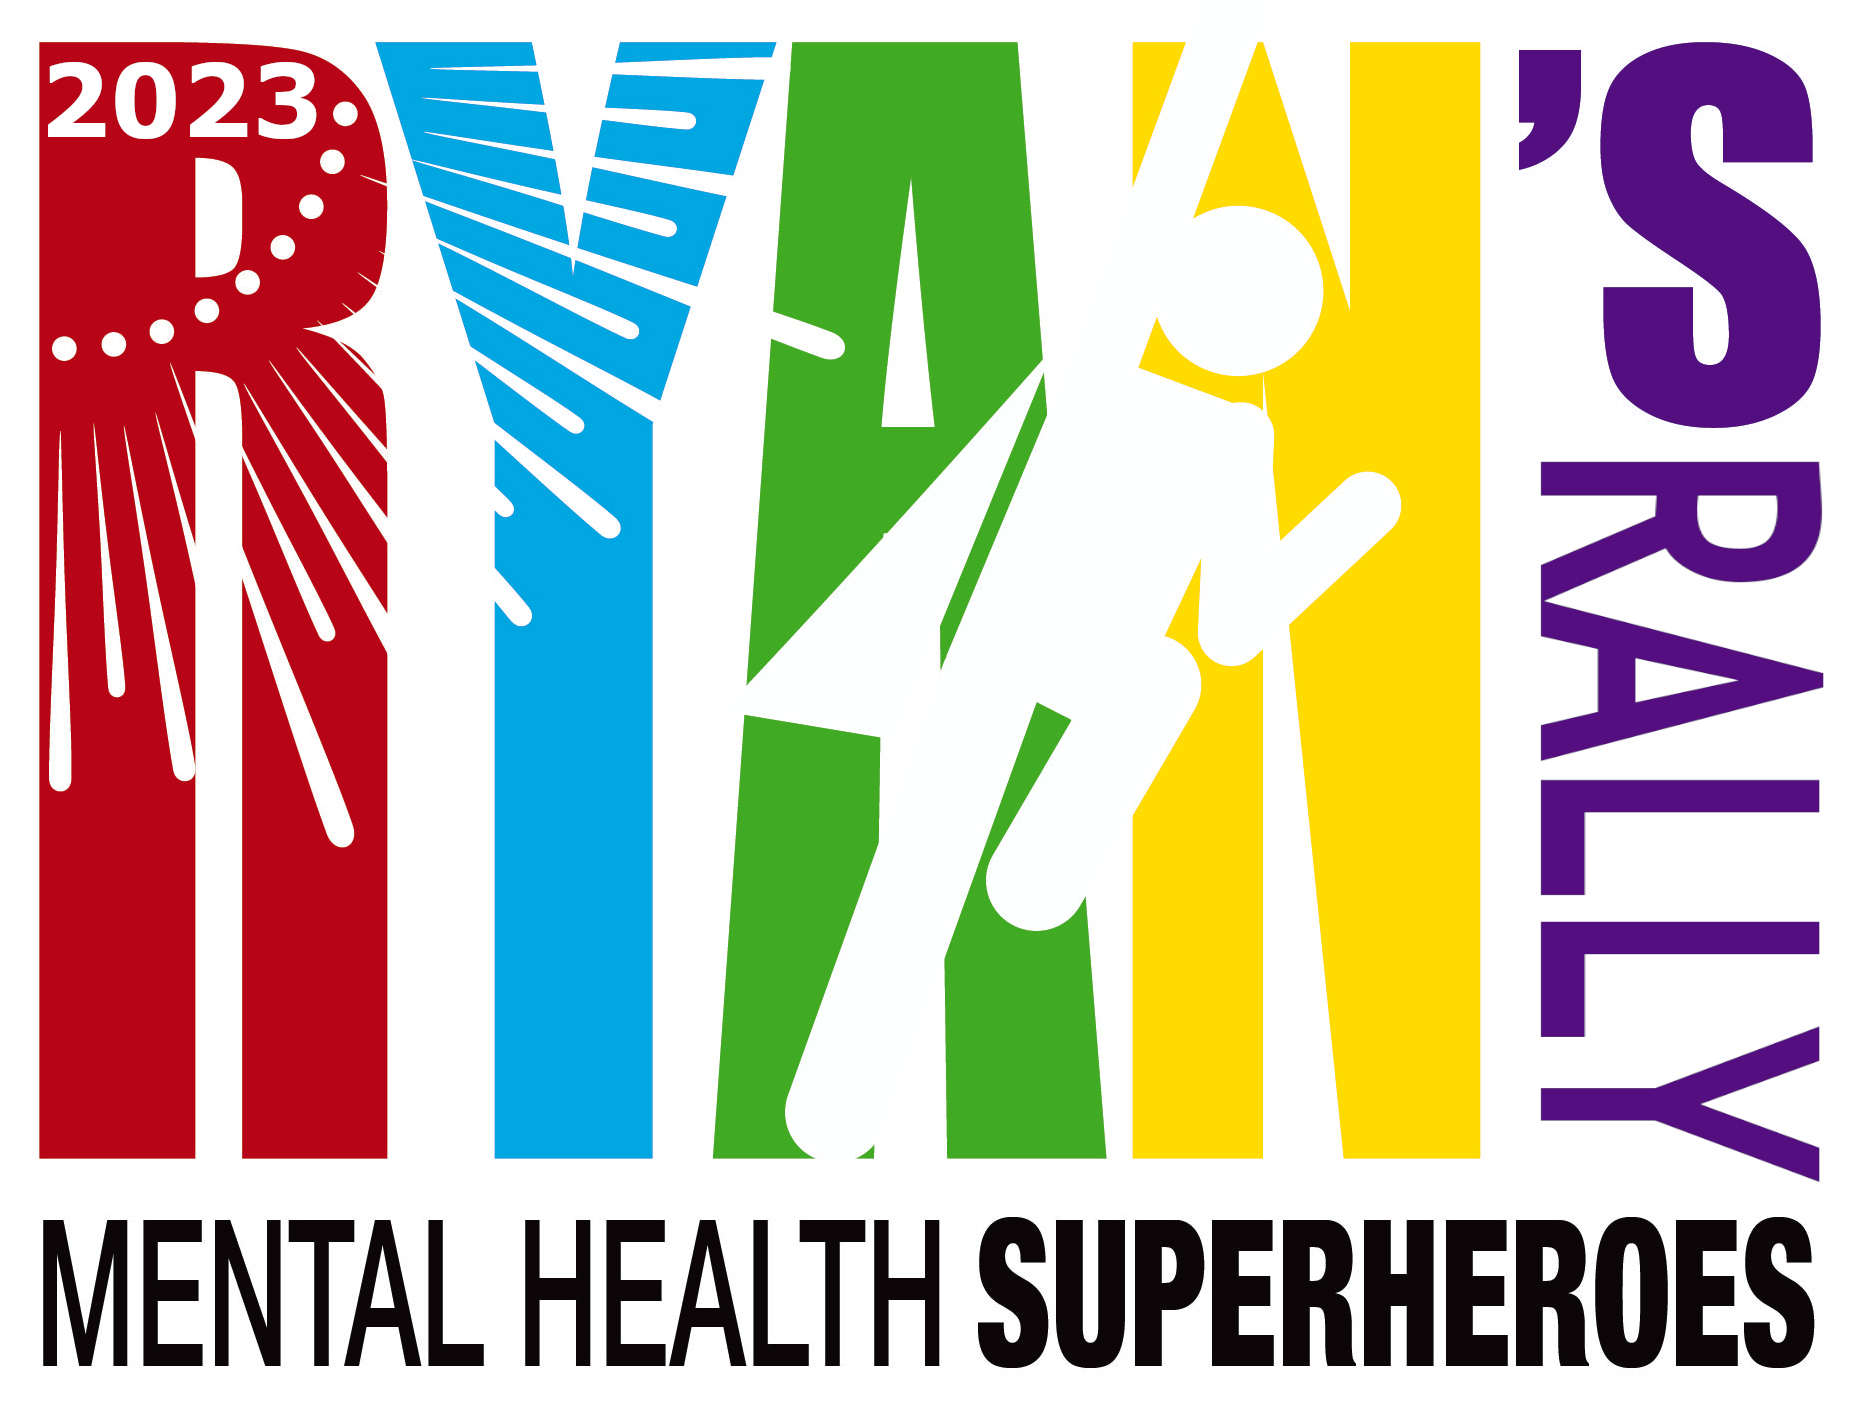 Ryan’s Rally For Mental Health Superheroes logo on RaceRaves